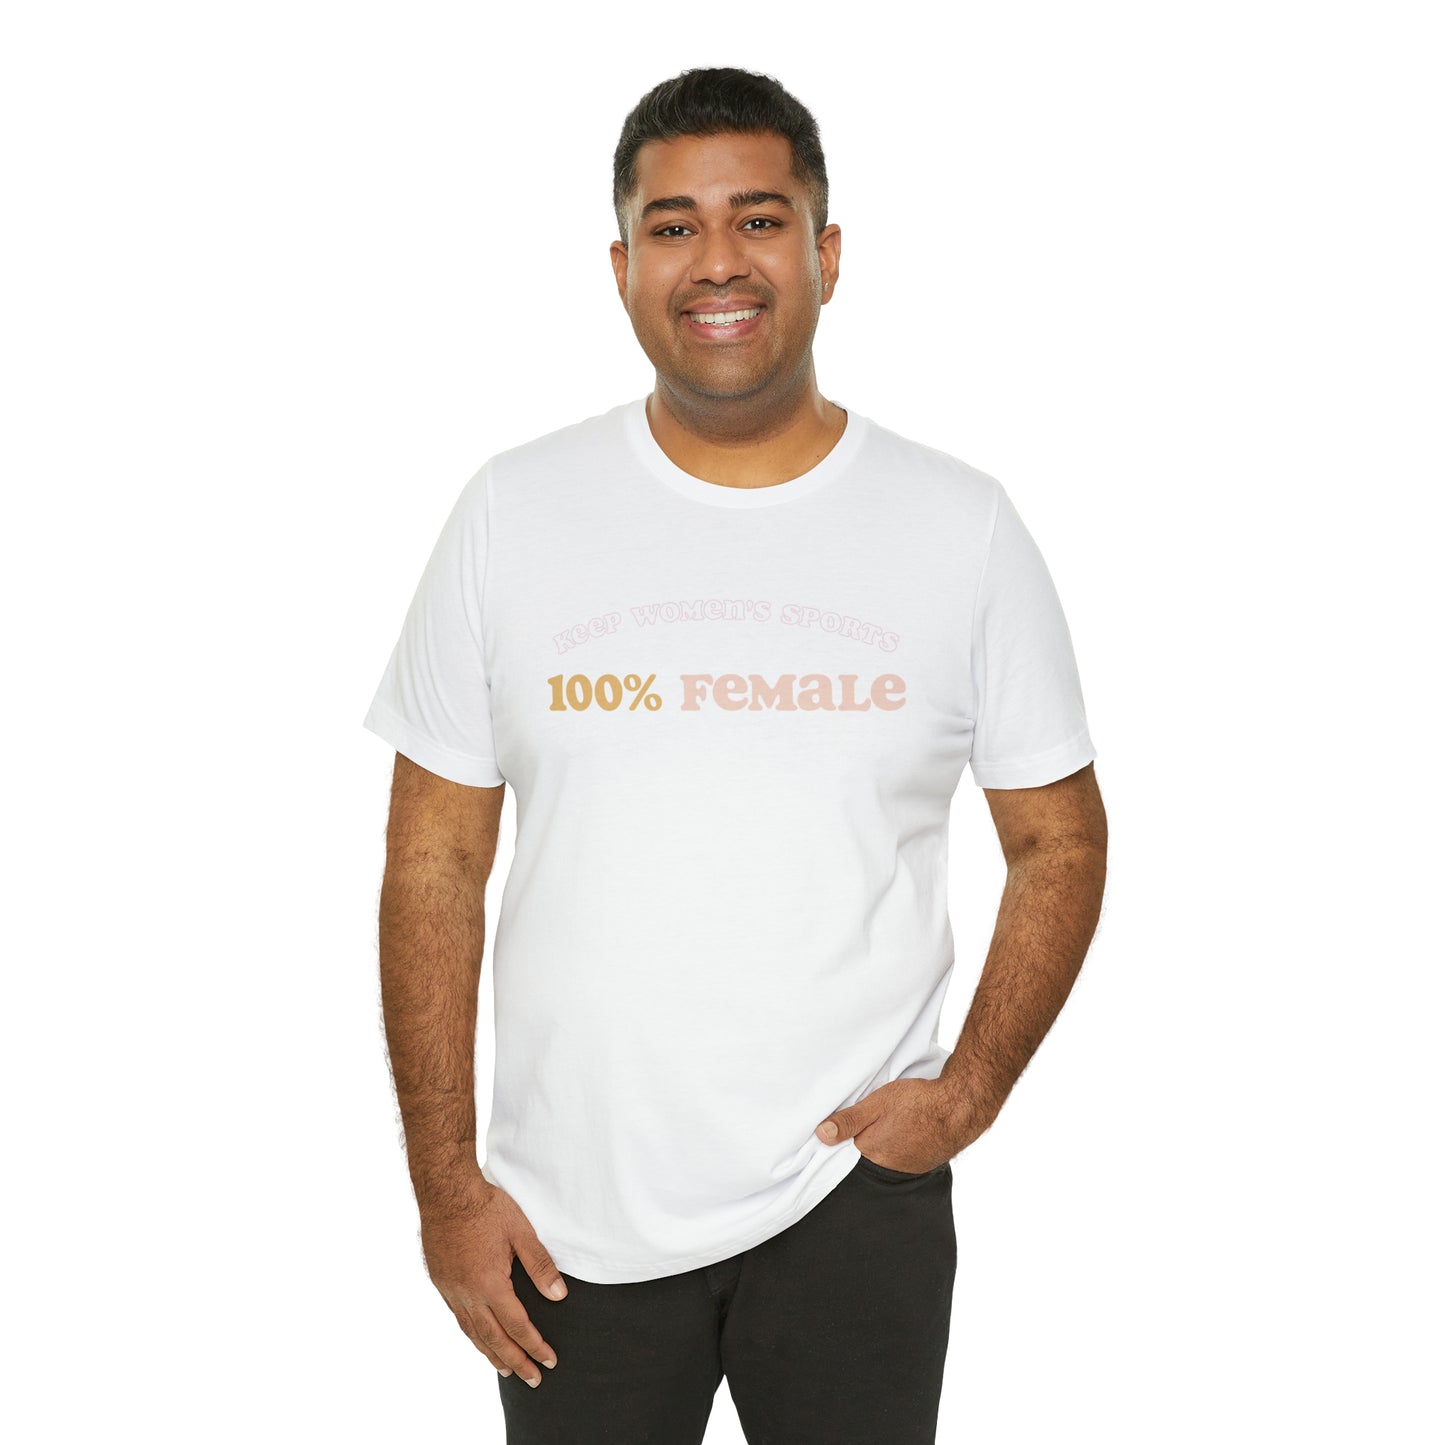 Keep Women's Sports 100% Female T-shirt